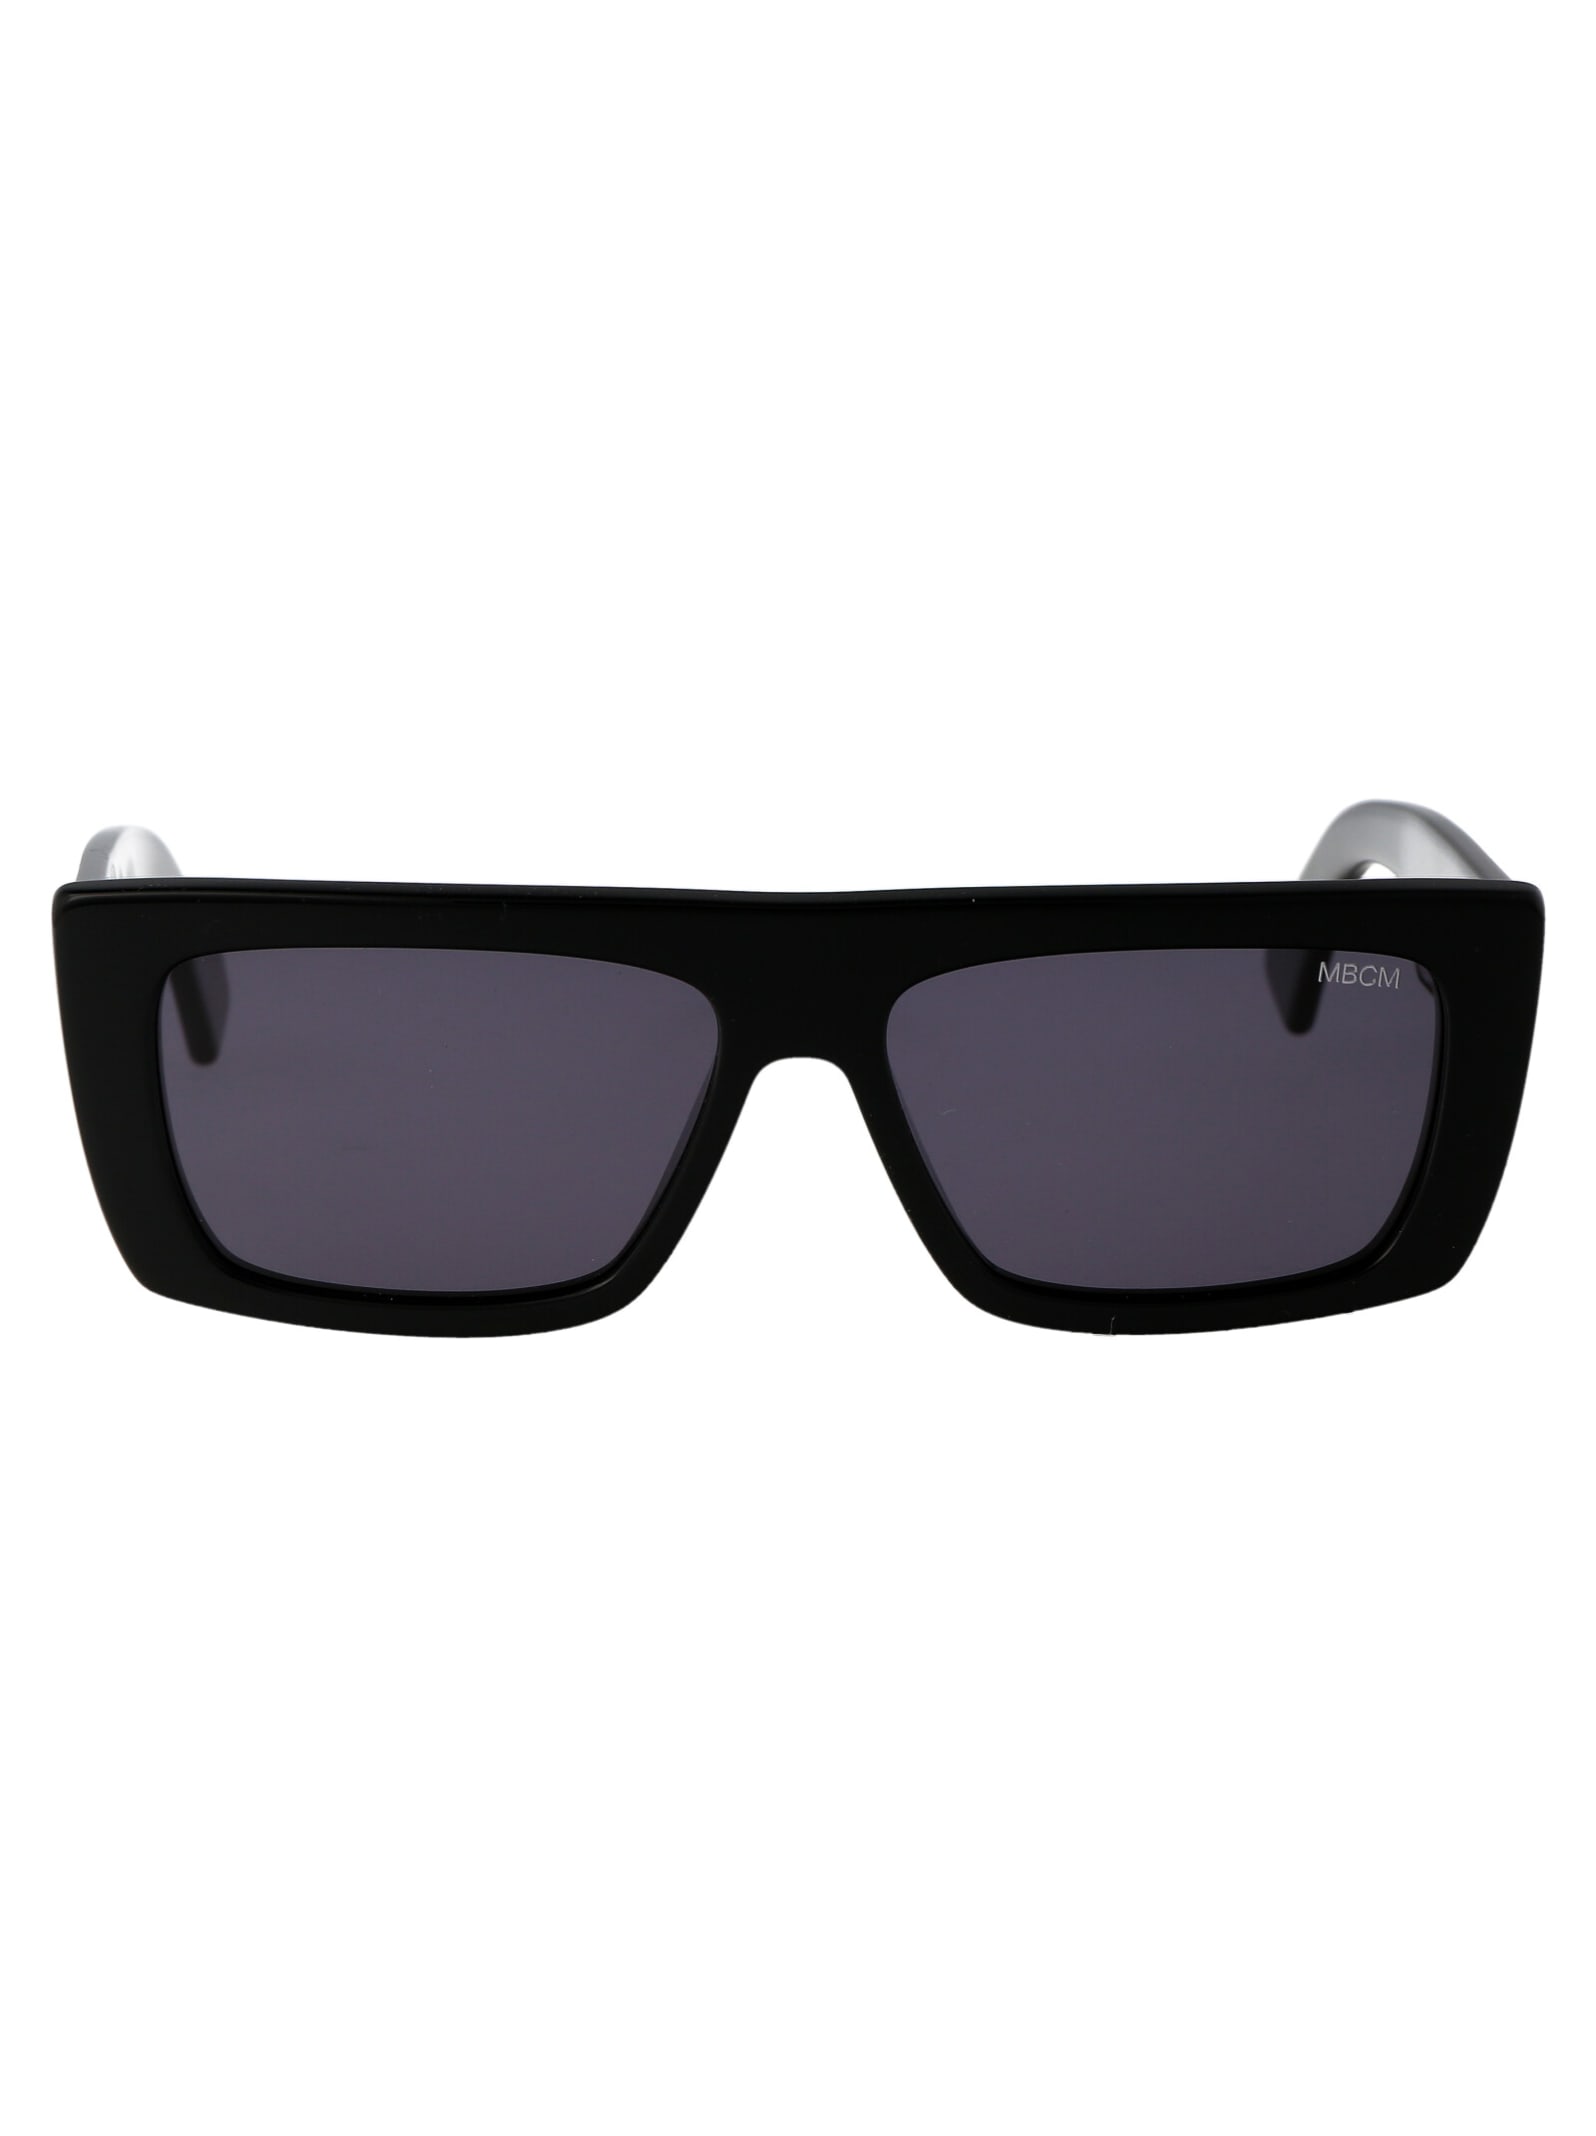 Lebu Sunglasses